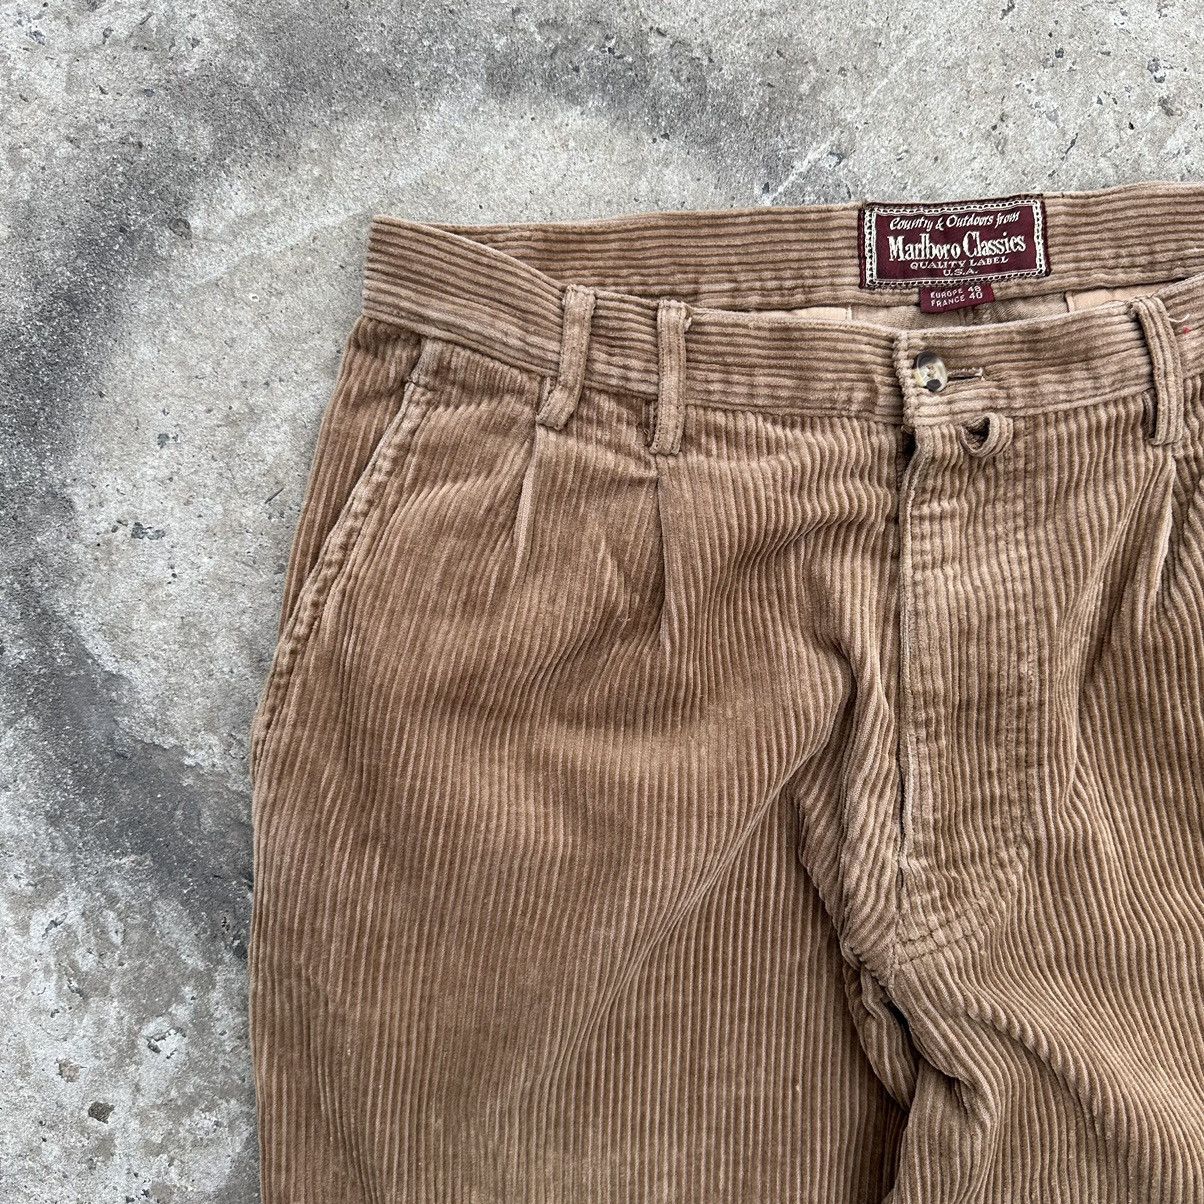 Vintage Vintage Corduroy Pants Marlboro Classic velveteen 90s Size US 32 / EU 48 - 7 Thumbnail